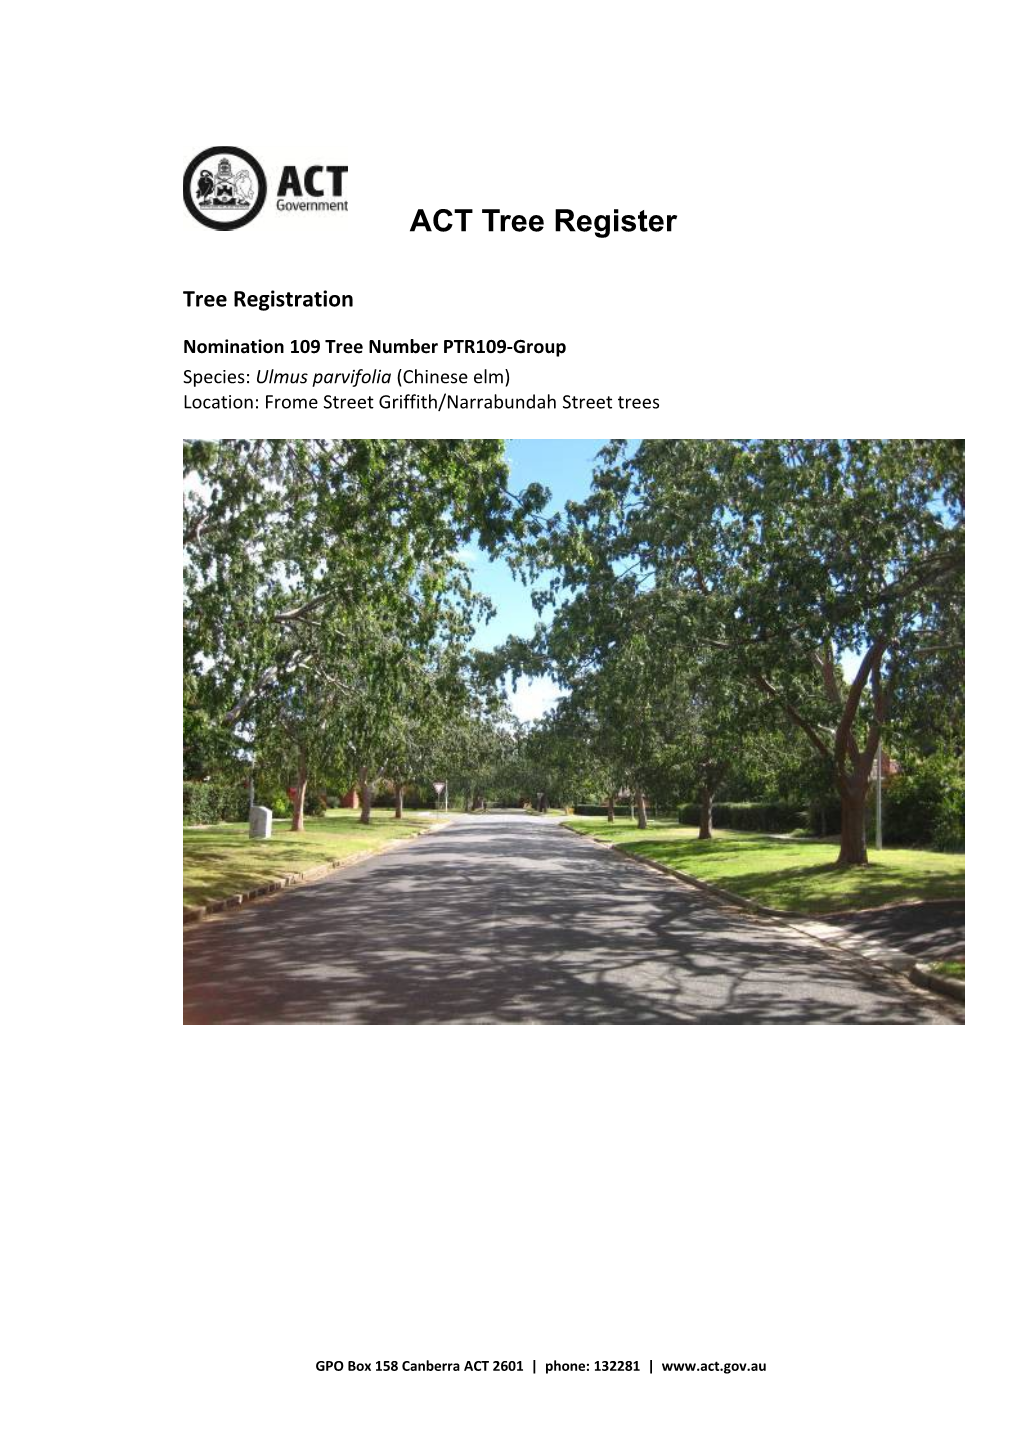 ACT Tree Register s1